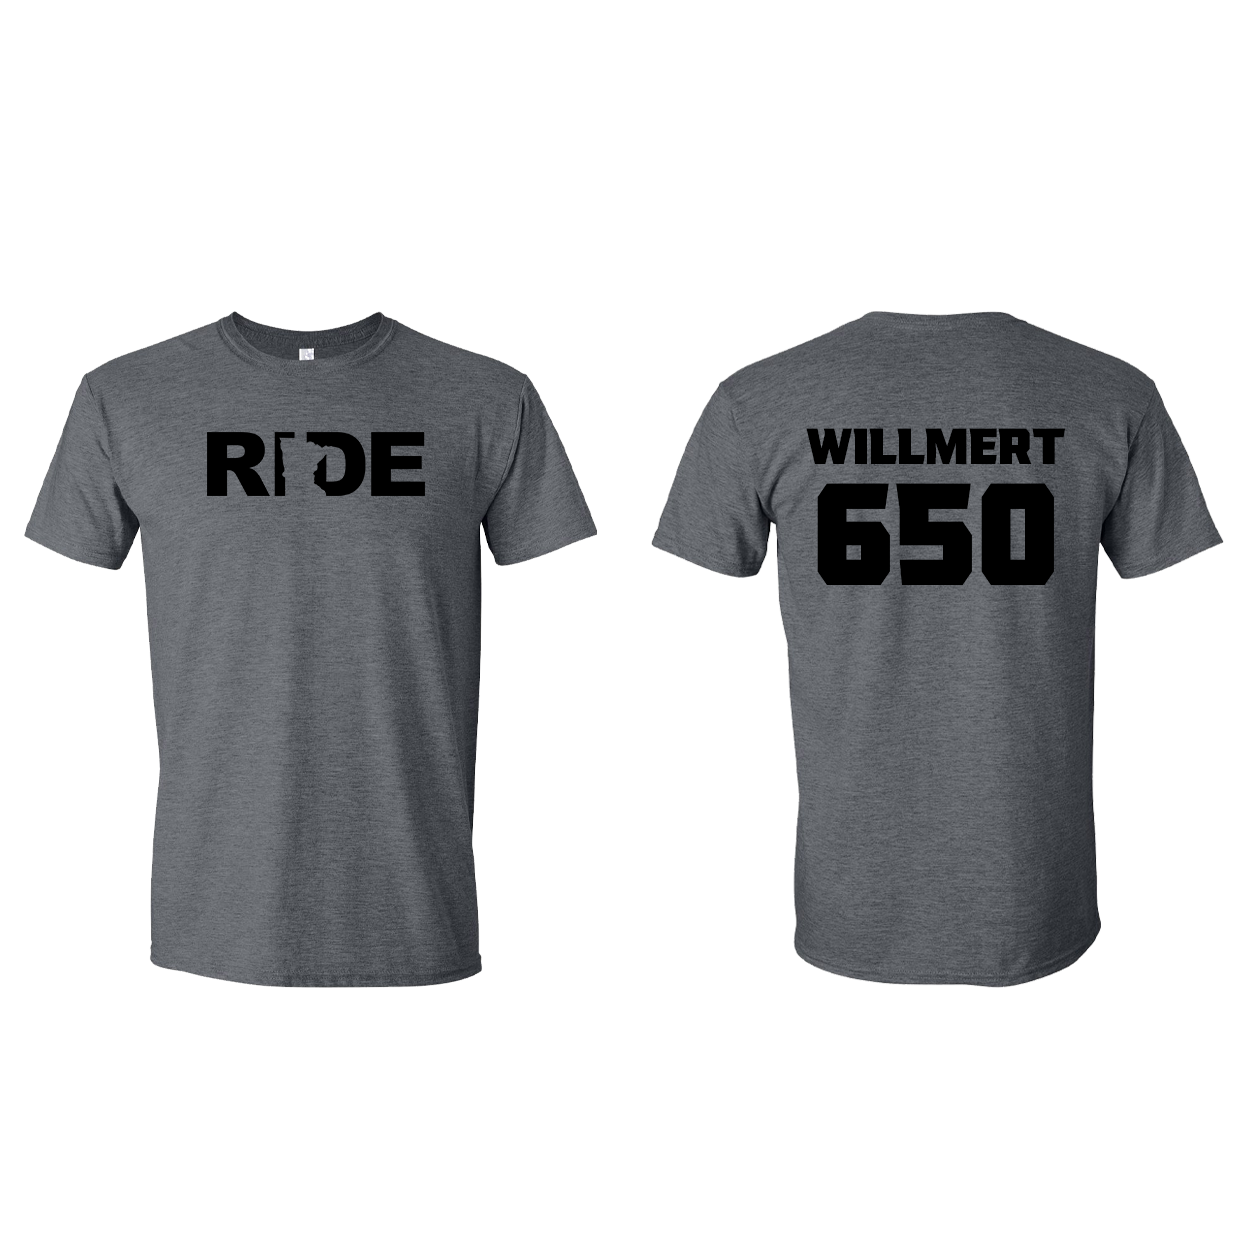 FXR BMX Race Team Classic Athlete Support T-Shirt J. WILLMERT #650 Dark Heather (Black Logo)